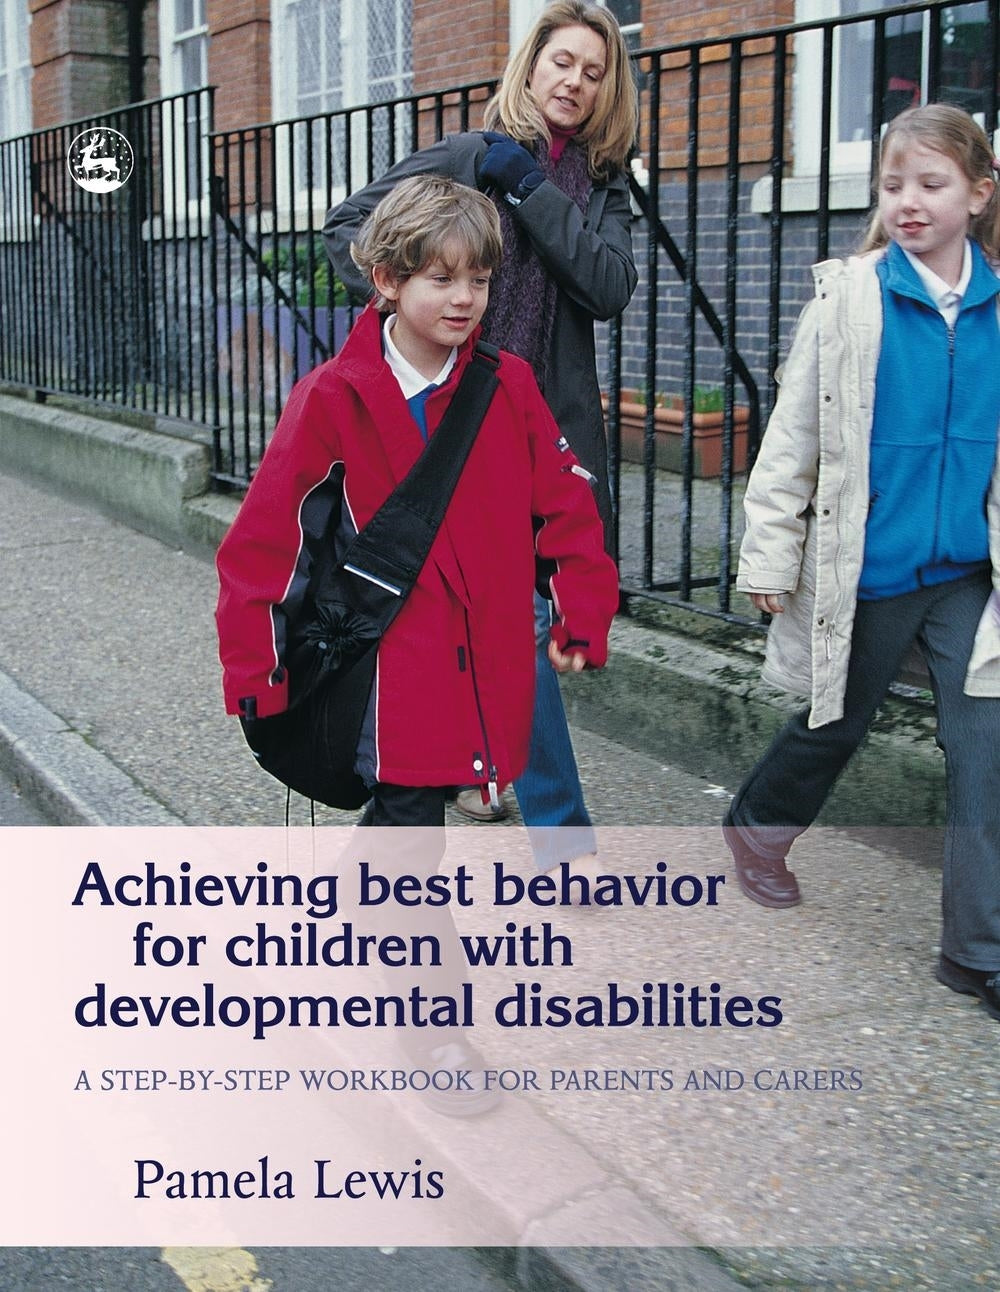 Achieving Best Behavior for Children with Developmental Disabilities by Pamela Lewis